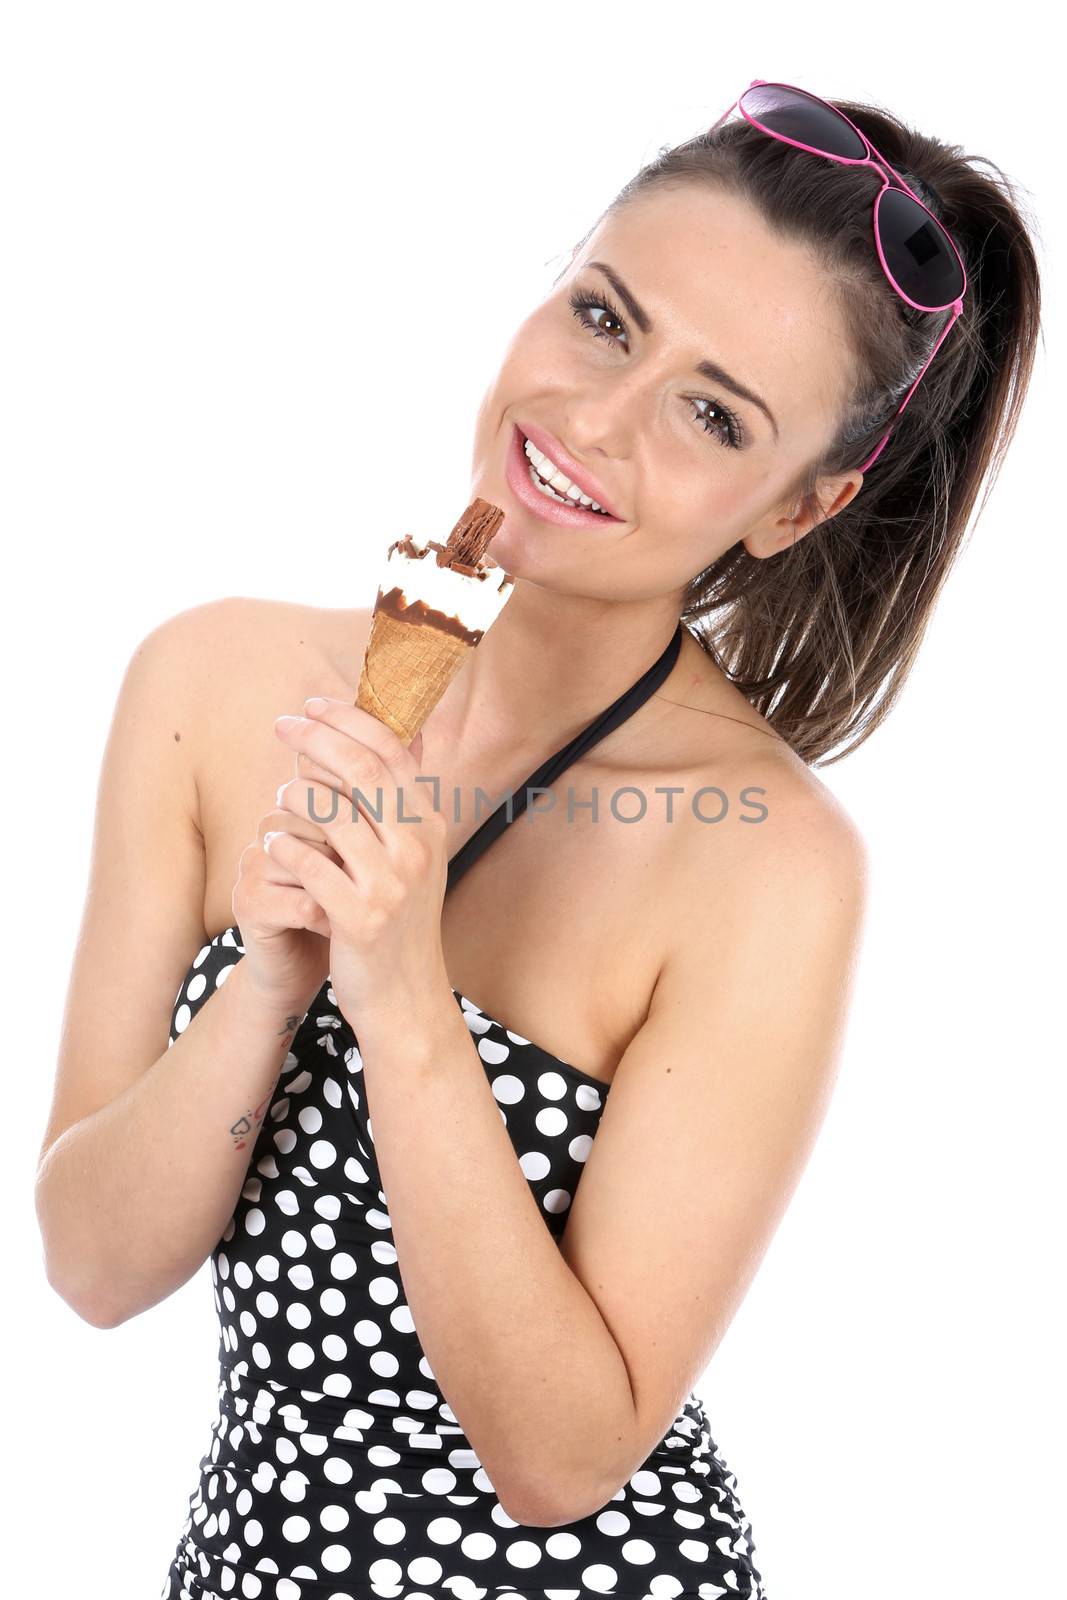 Model Released. Woman Eating Ice Cream Cornet